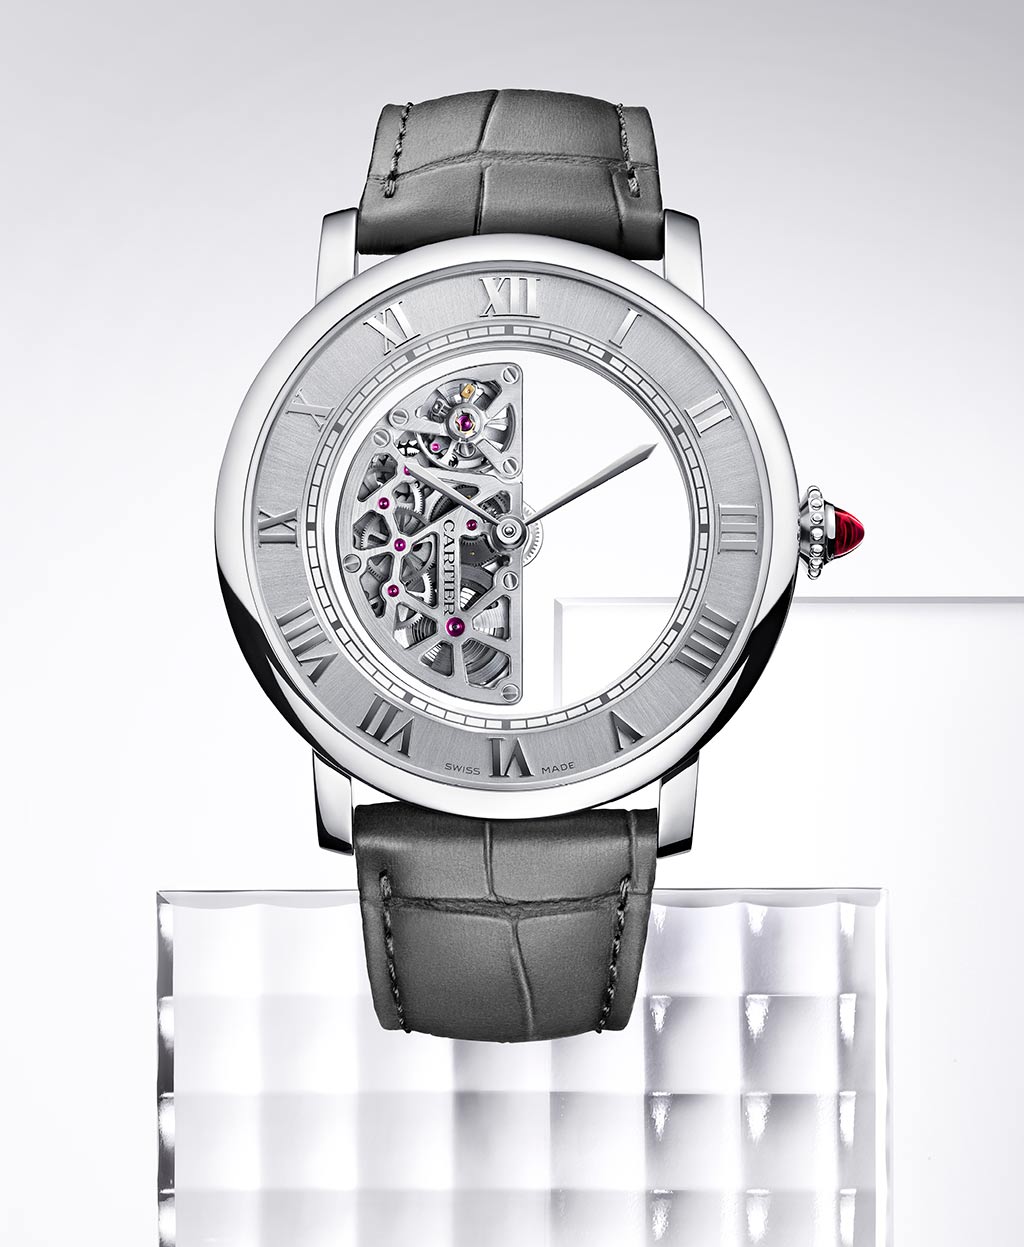 Spectacular Cartier Masse Mystérieuse Watch